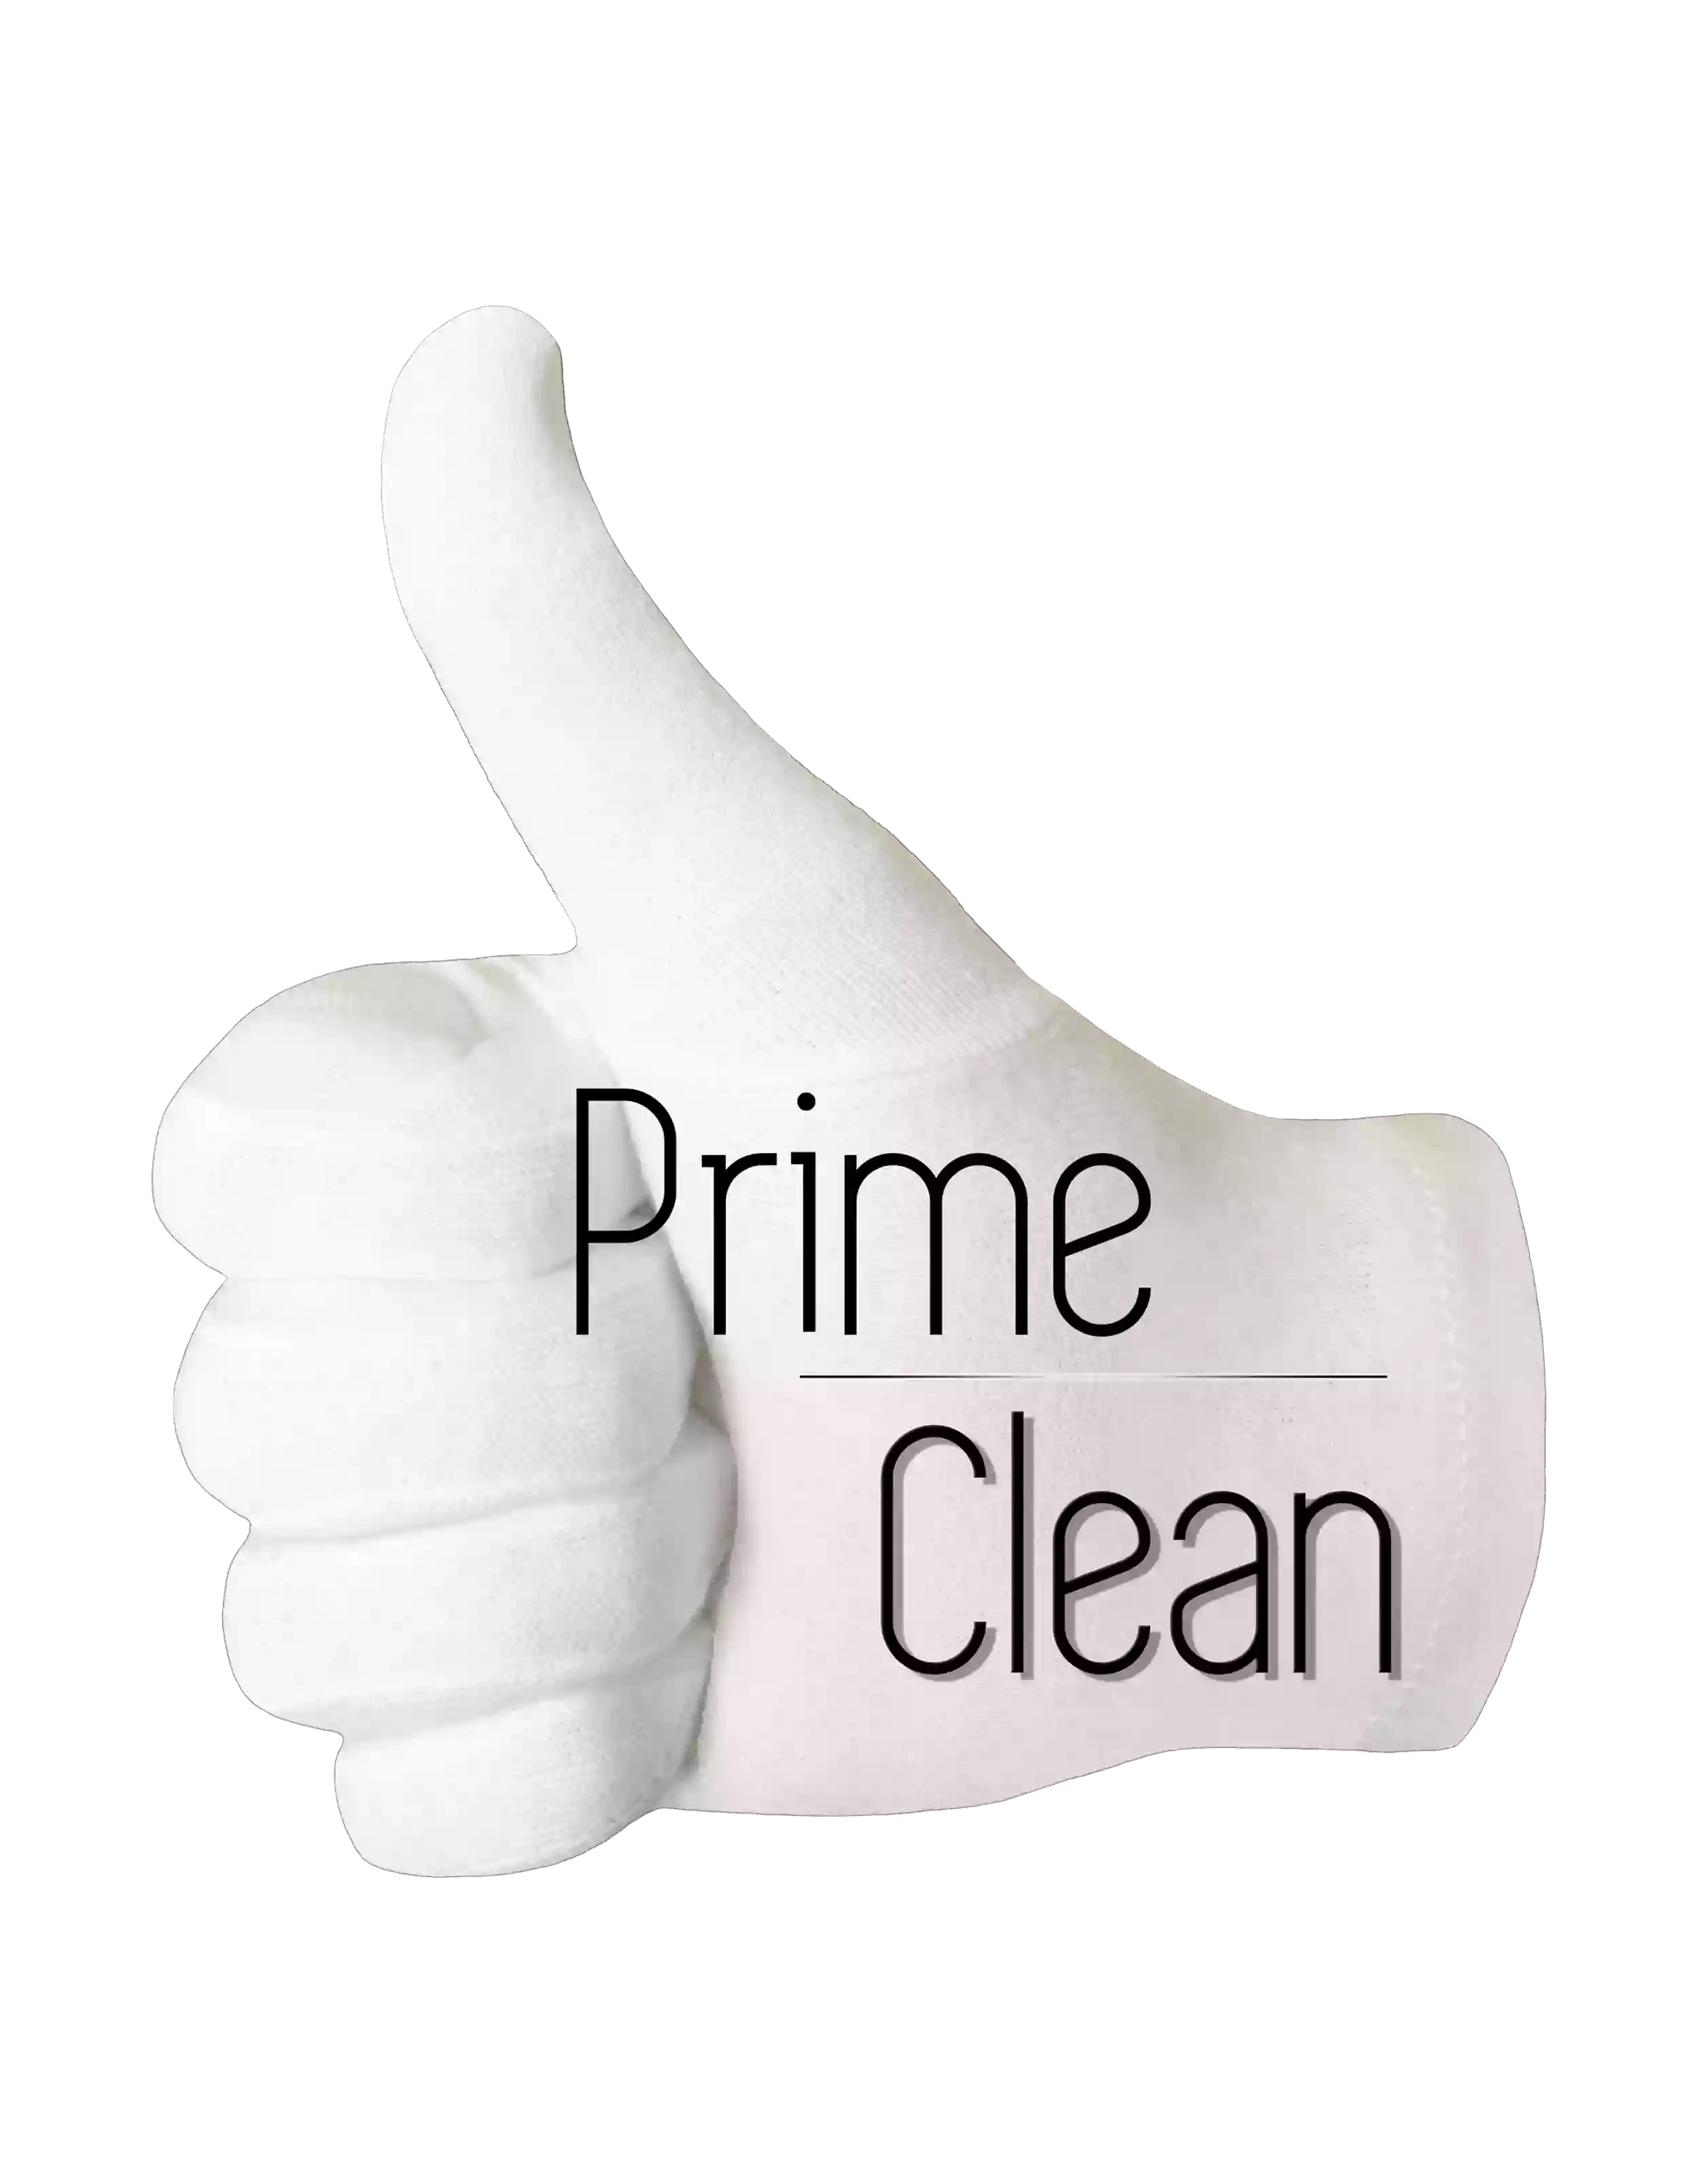 Prime-Clean